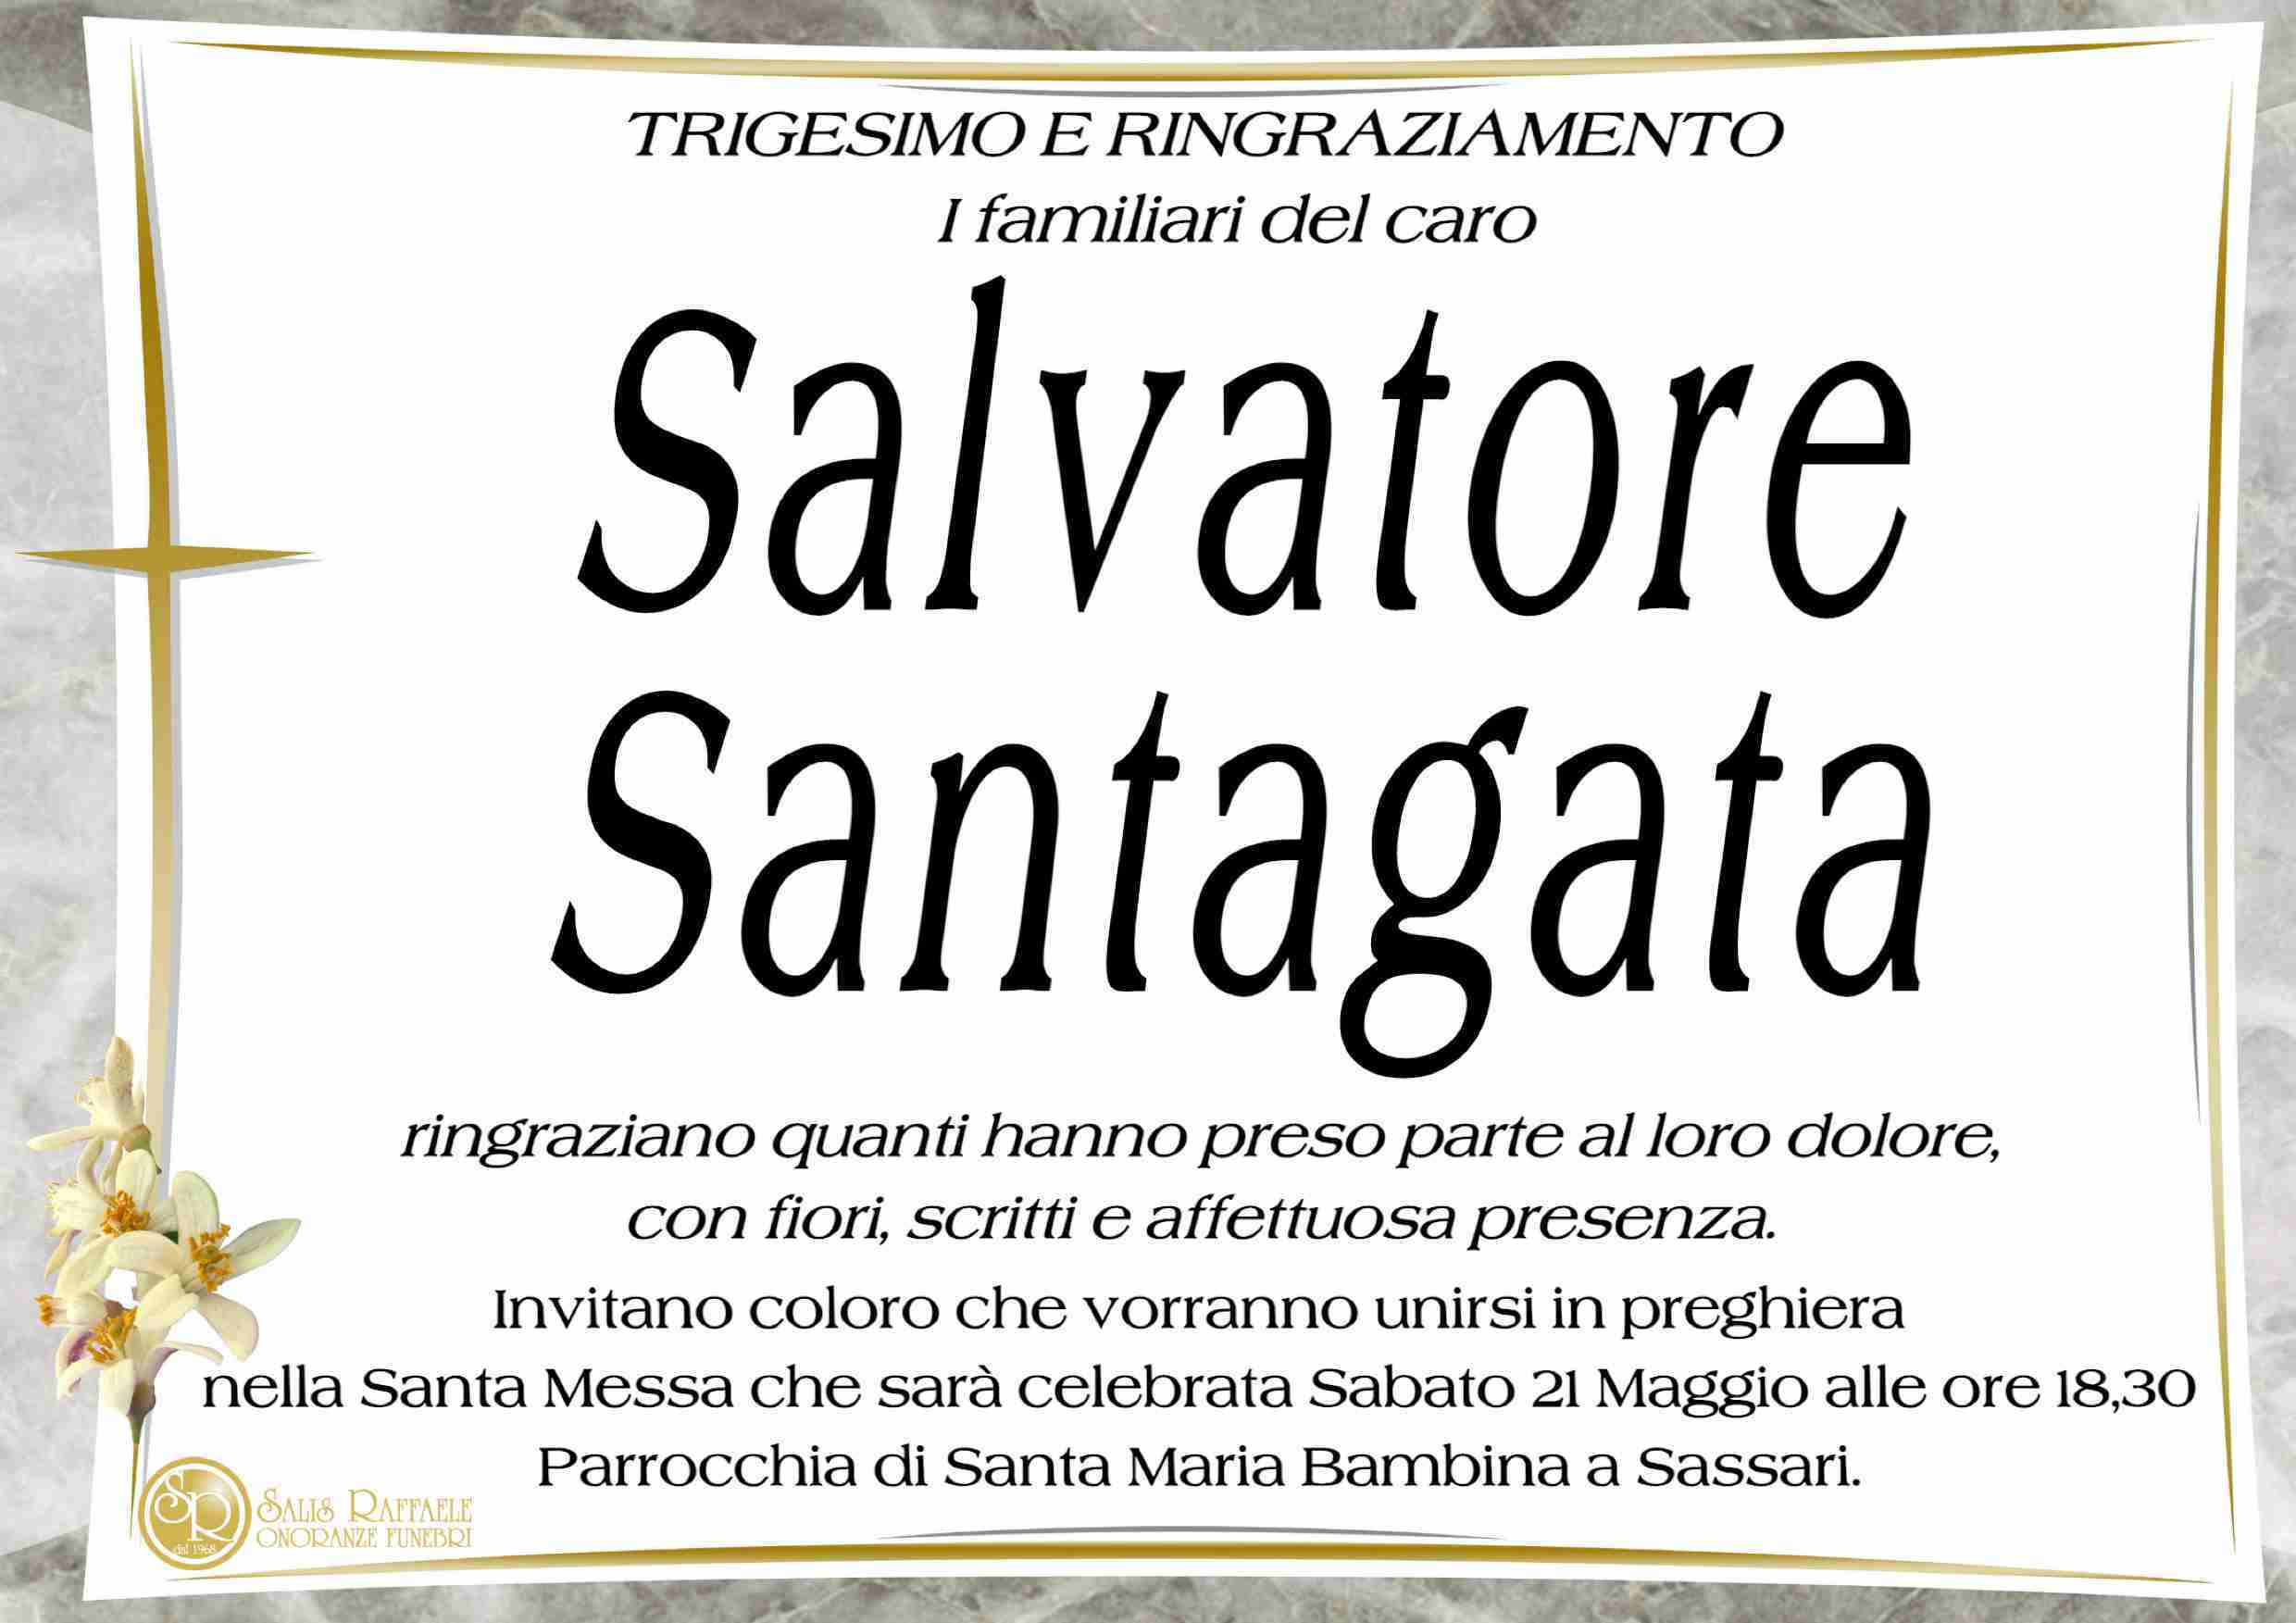 Salvatore Santagata